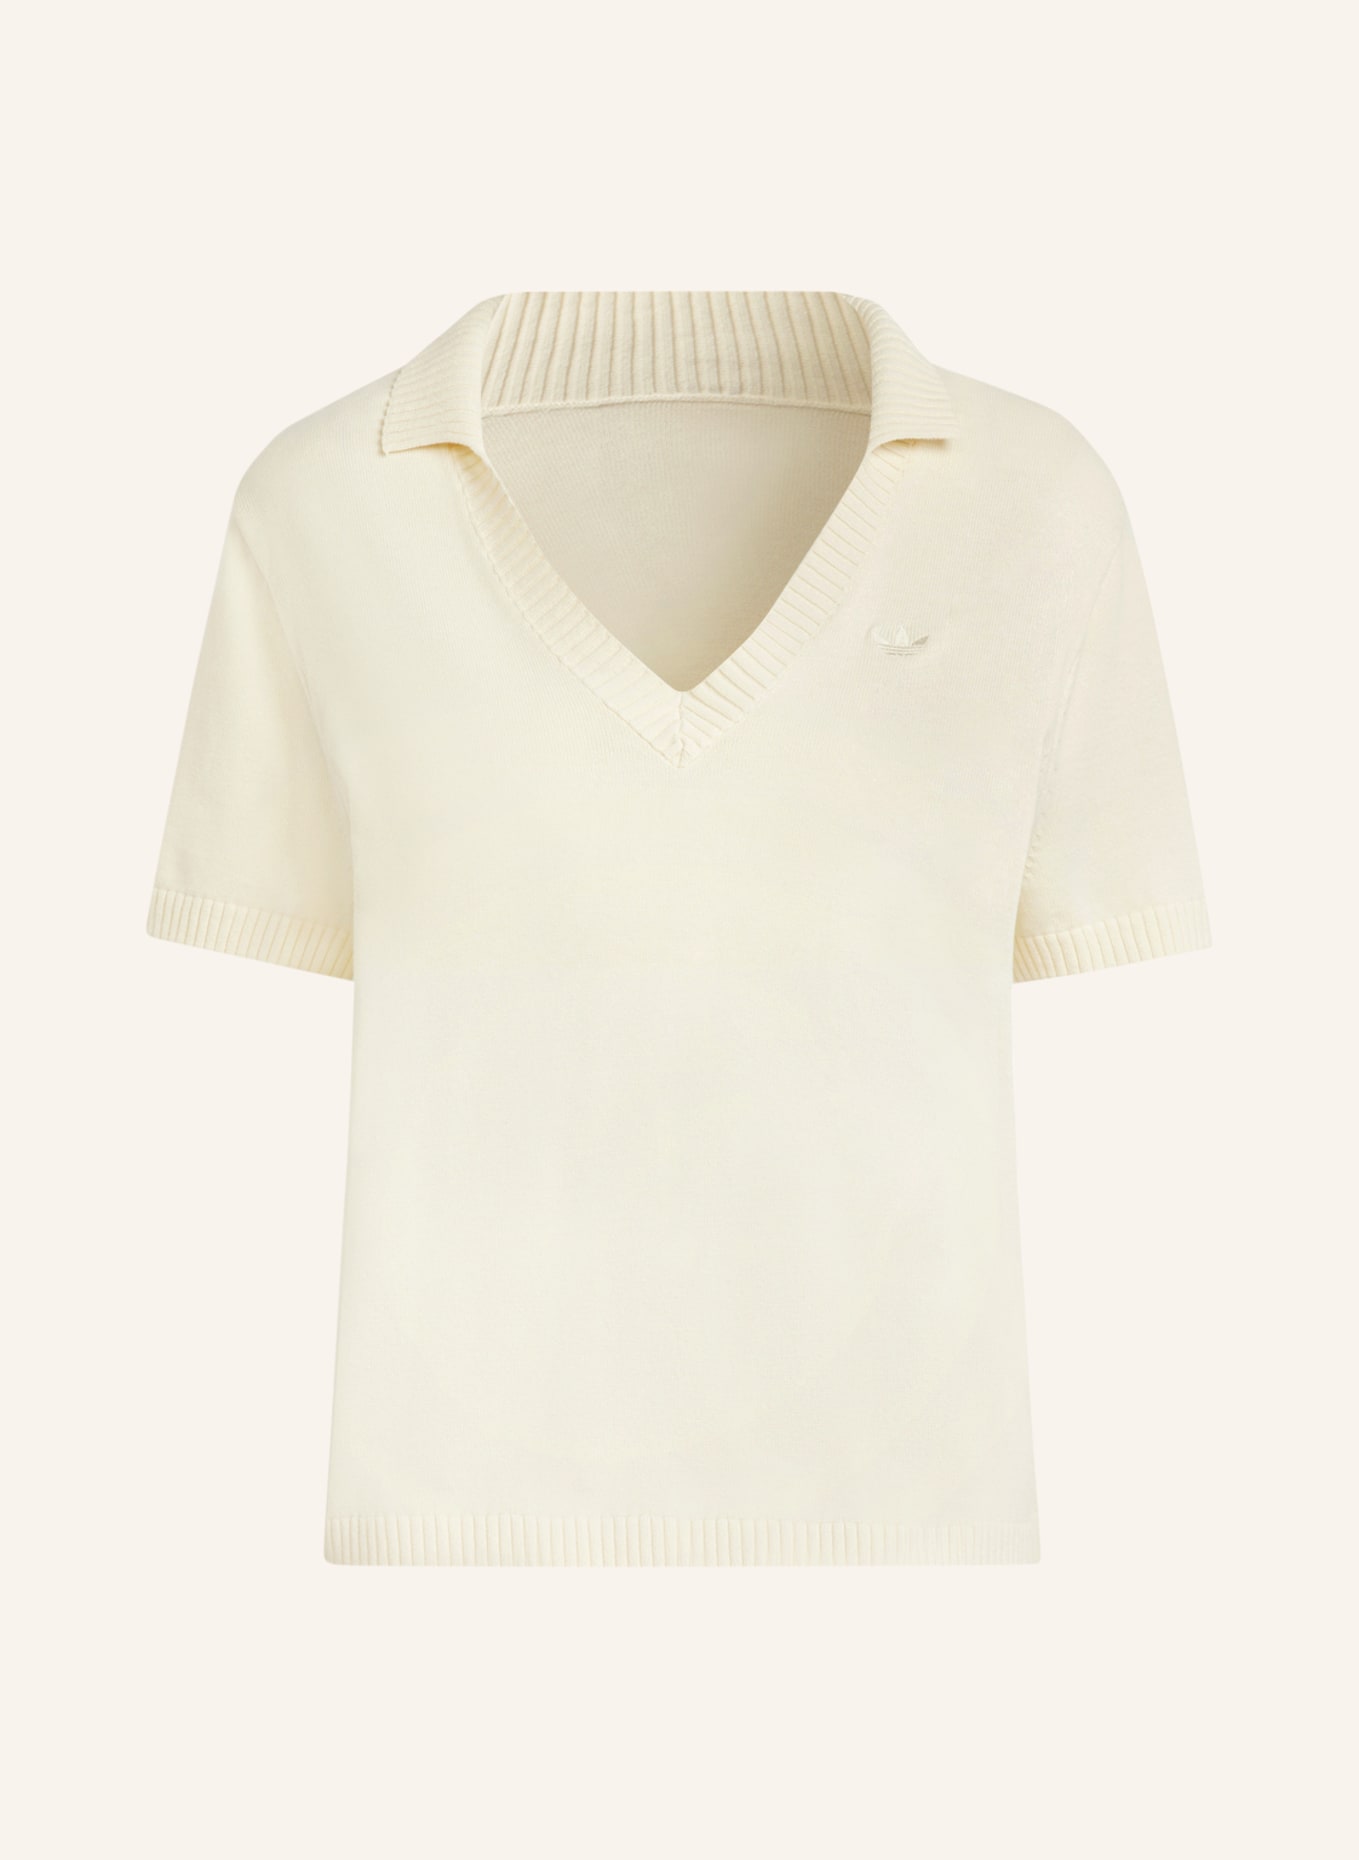 adidas Originals Strickshirt, Farbe: HELLGELB (Bild 1)